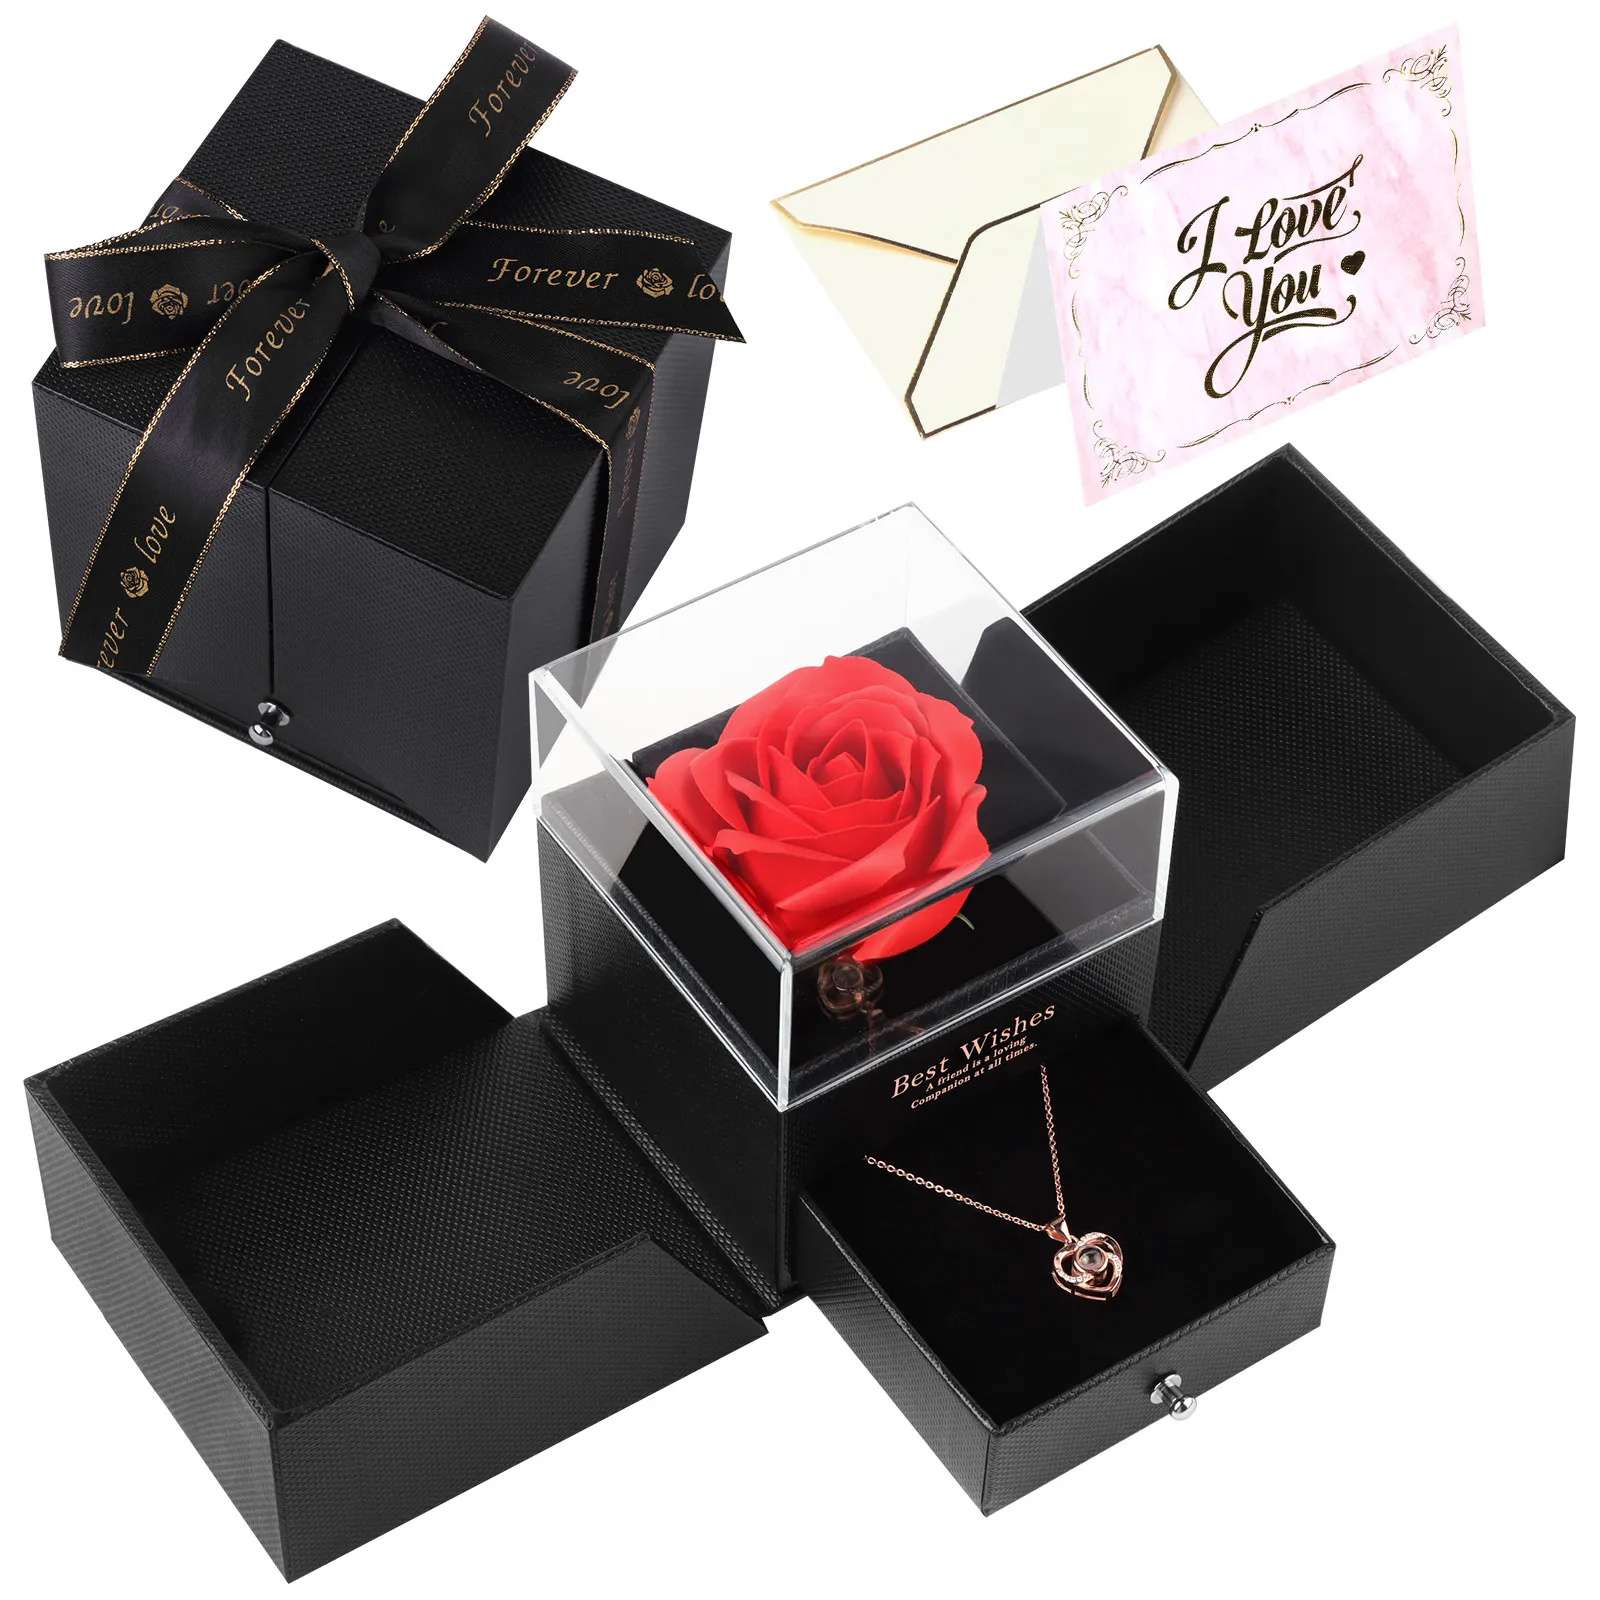 Andra festliga festförsörjningar Behogar Eternal Flower Soap Rose Jewelry Box With Heart Necklace Romantic Surprise Present till fru Girl Girliss On Valentine Day 230206